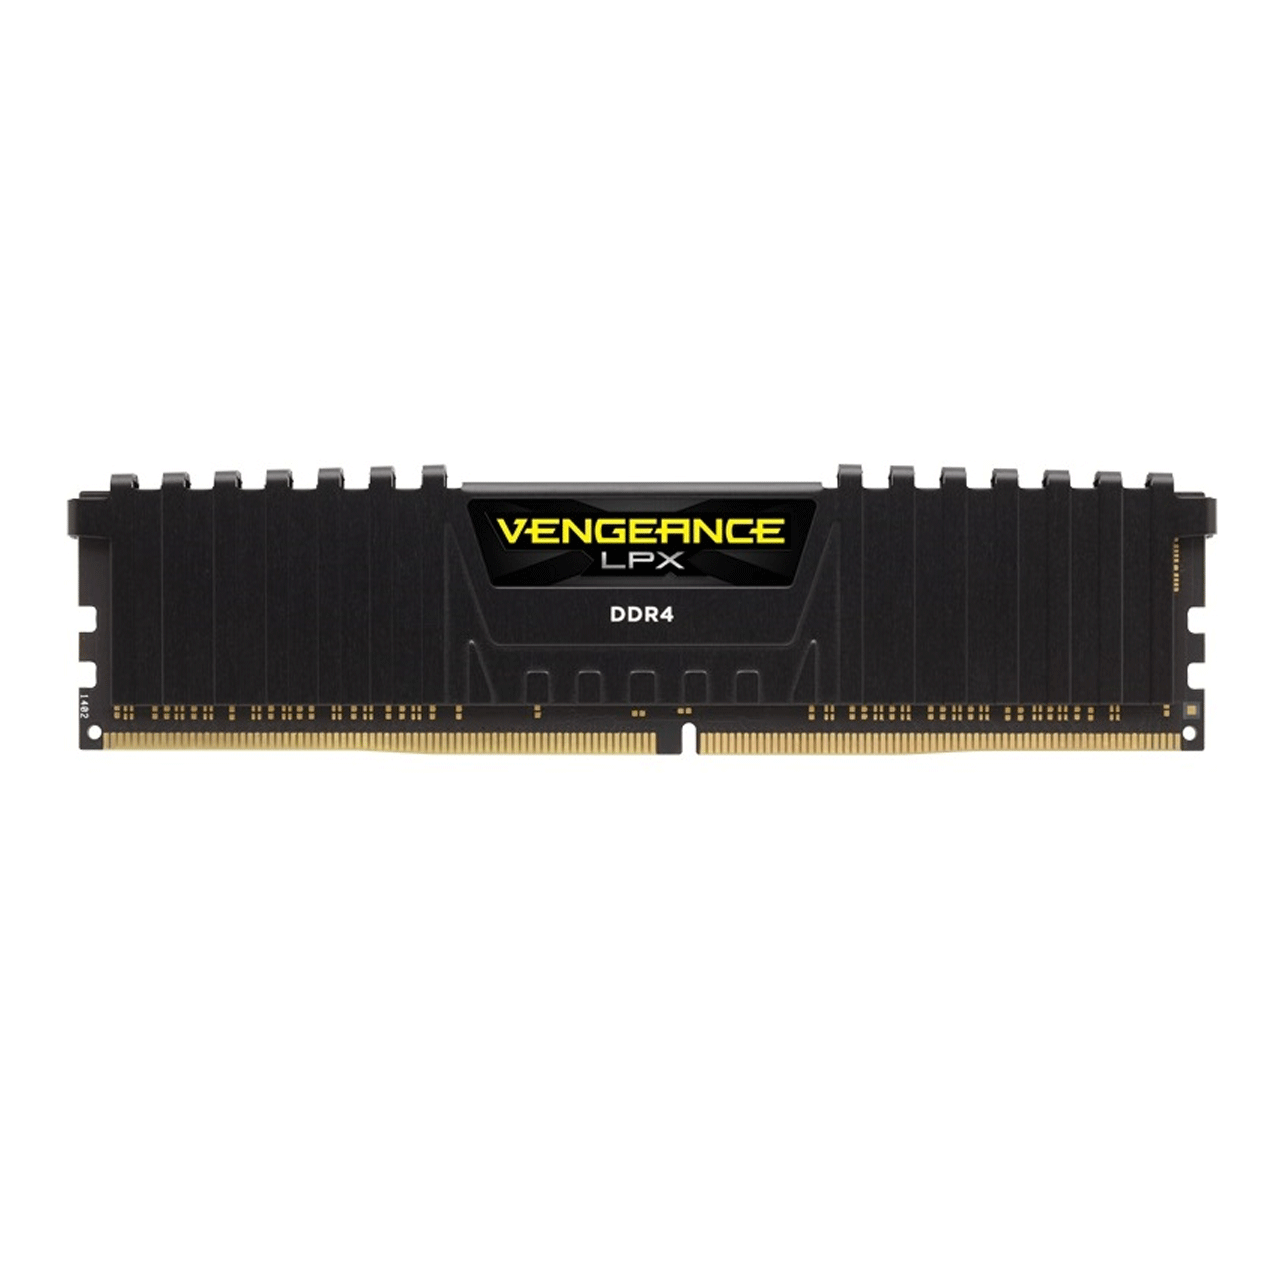 Vengeance-LPX-DDR4-16GB-8GB-x-2-3000MHz-CL1-5-Dual-Channel-Ram